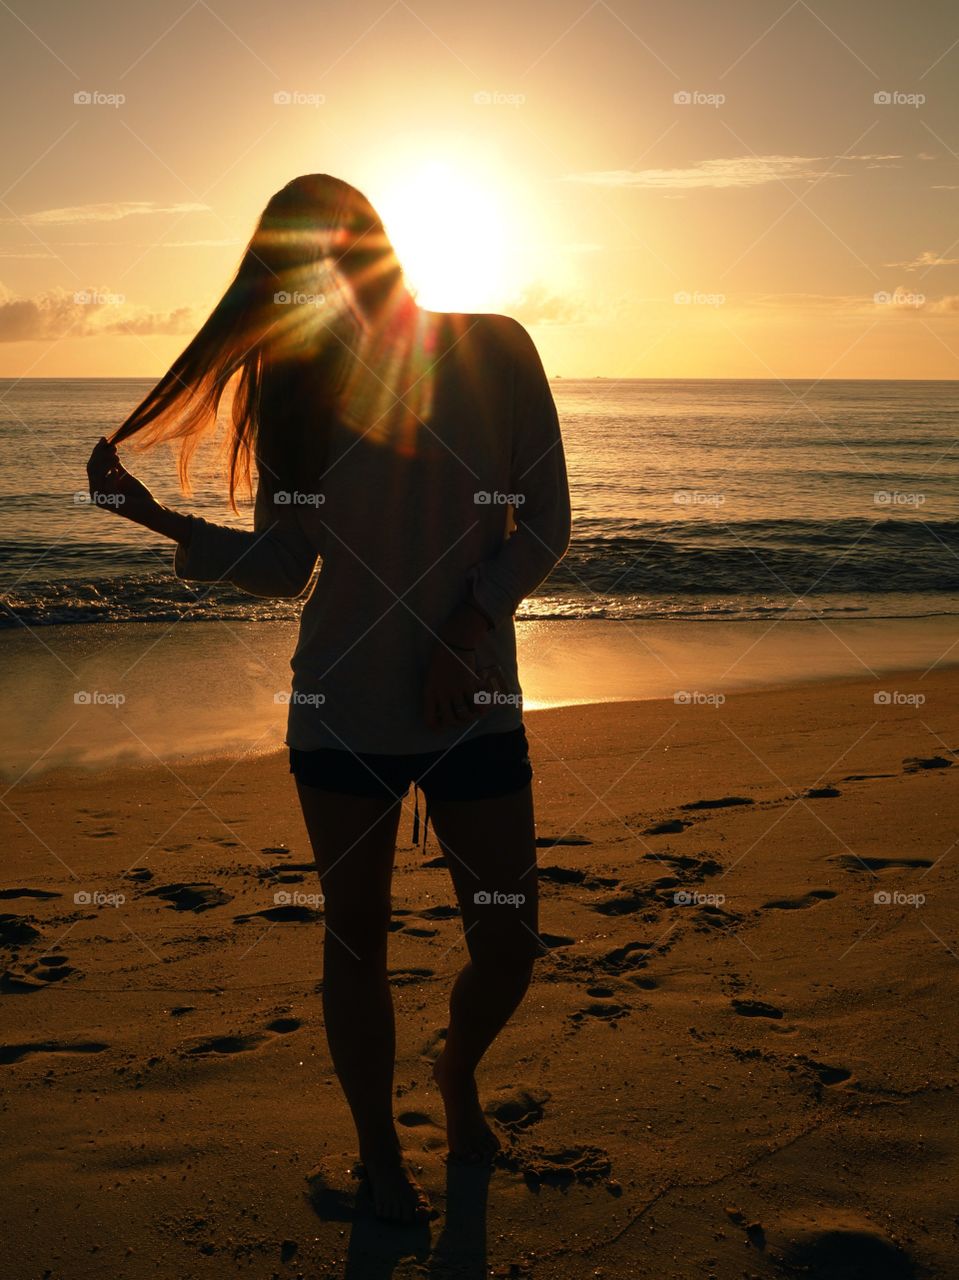 Silhouette of woman standing near sandy beach